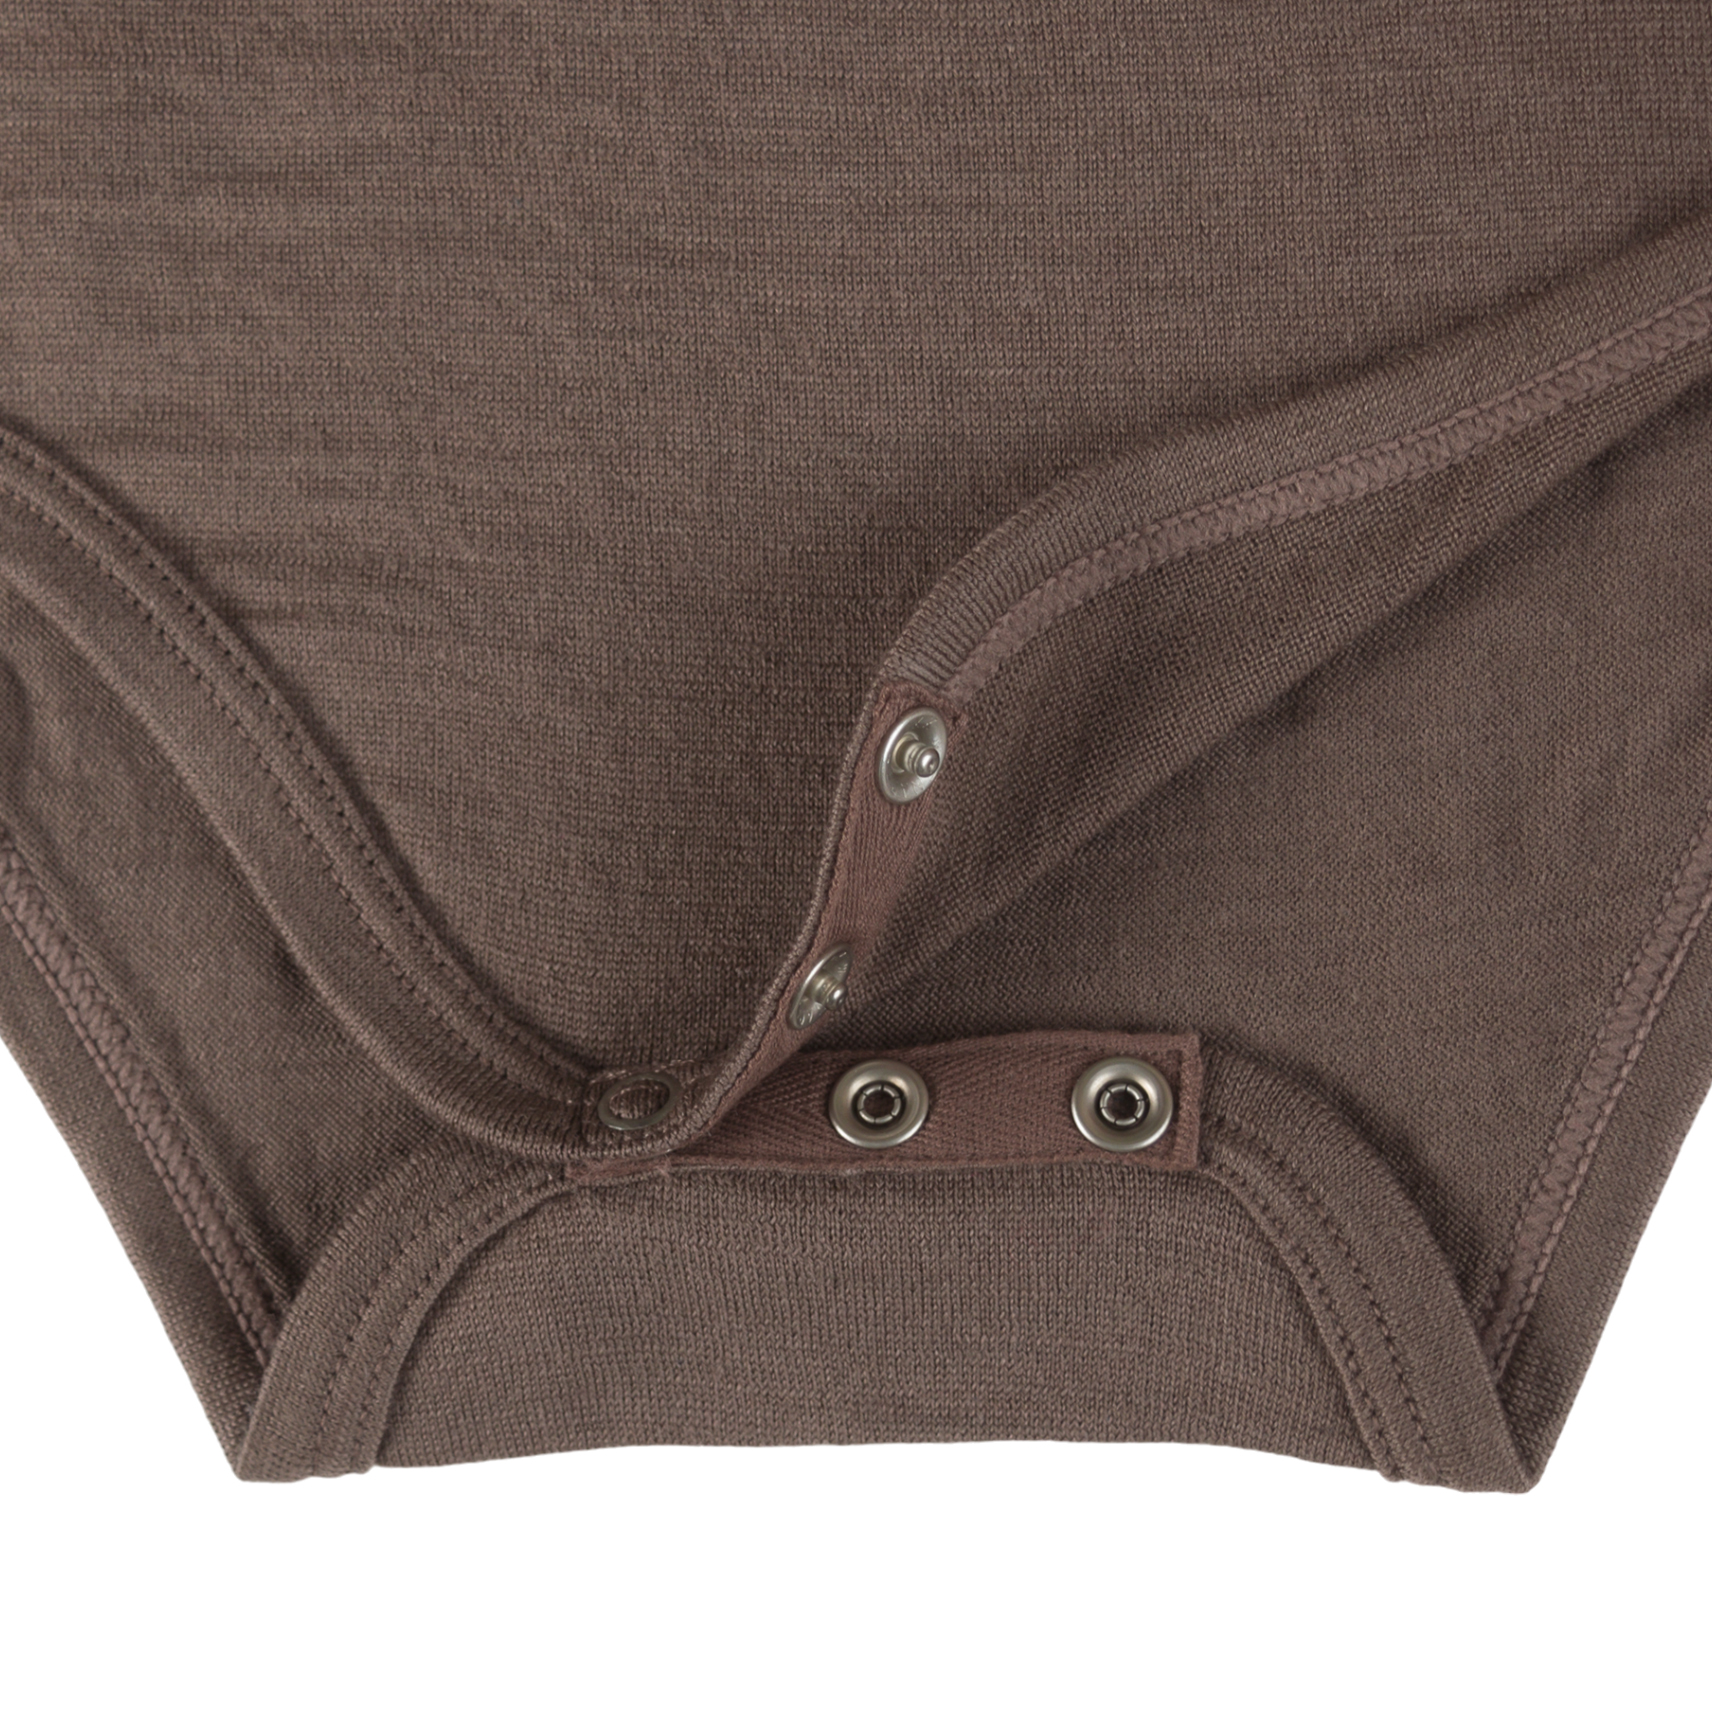 The Sleep Store Jersey Merino - Long Sleeve Bodysuit